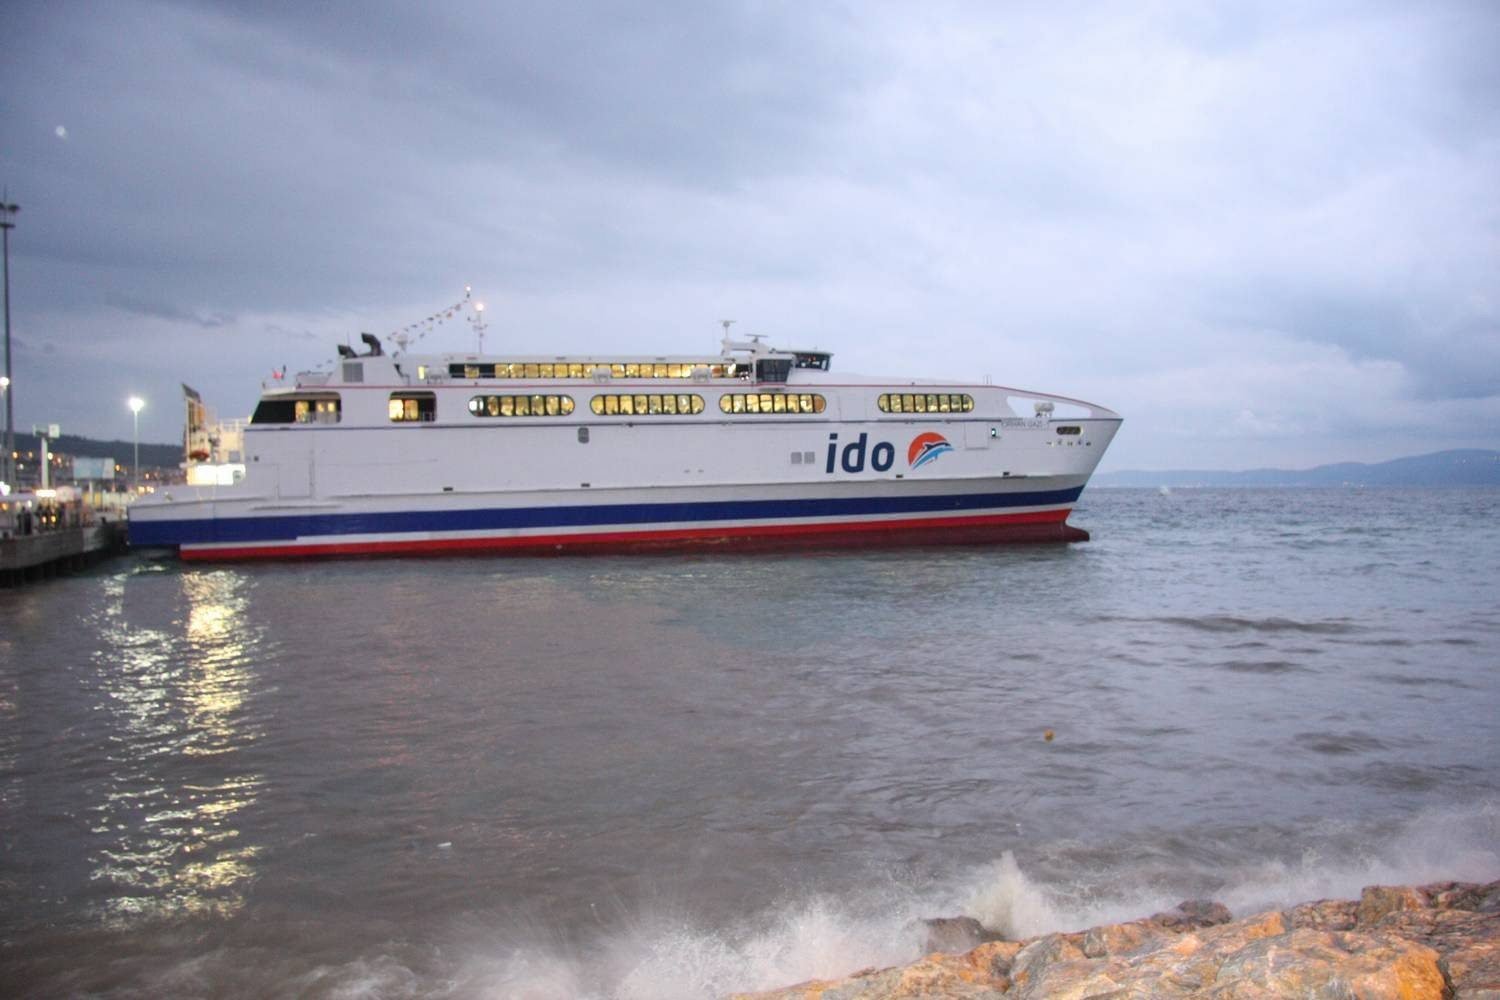 A view of the ferry docked at the port, in Bursa, northwestern Turkey, Oct. 19, 2013. (IHA PHOTO)